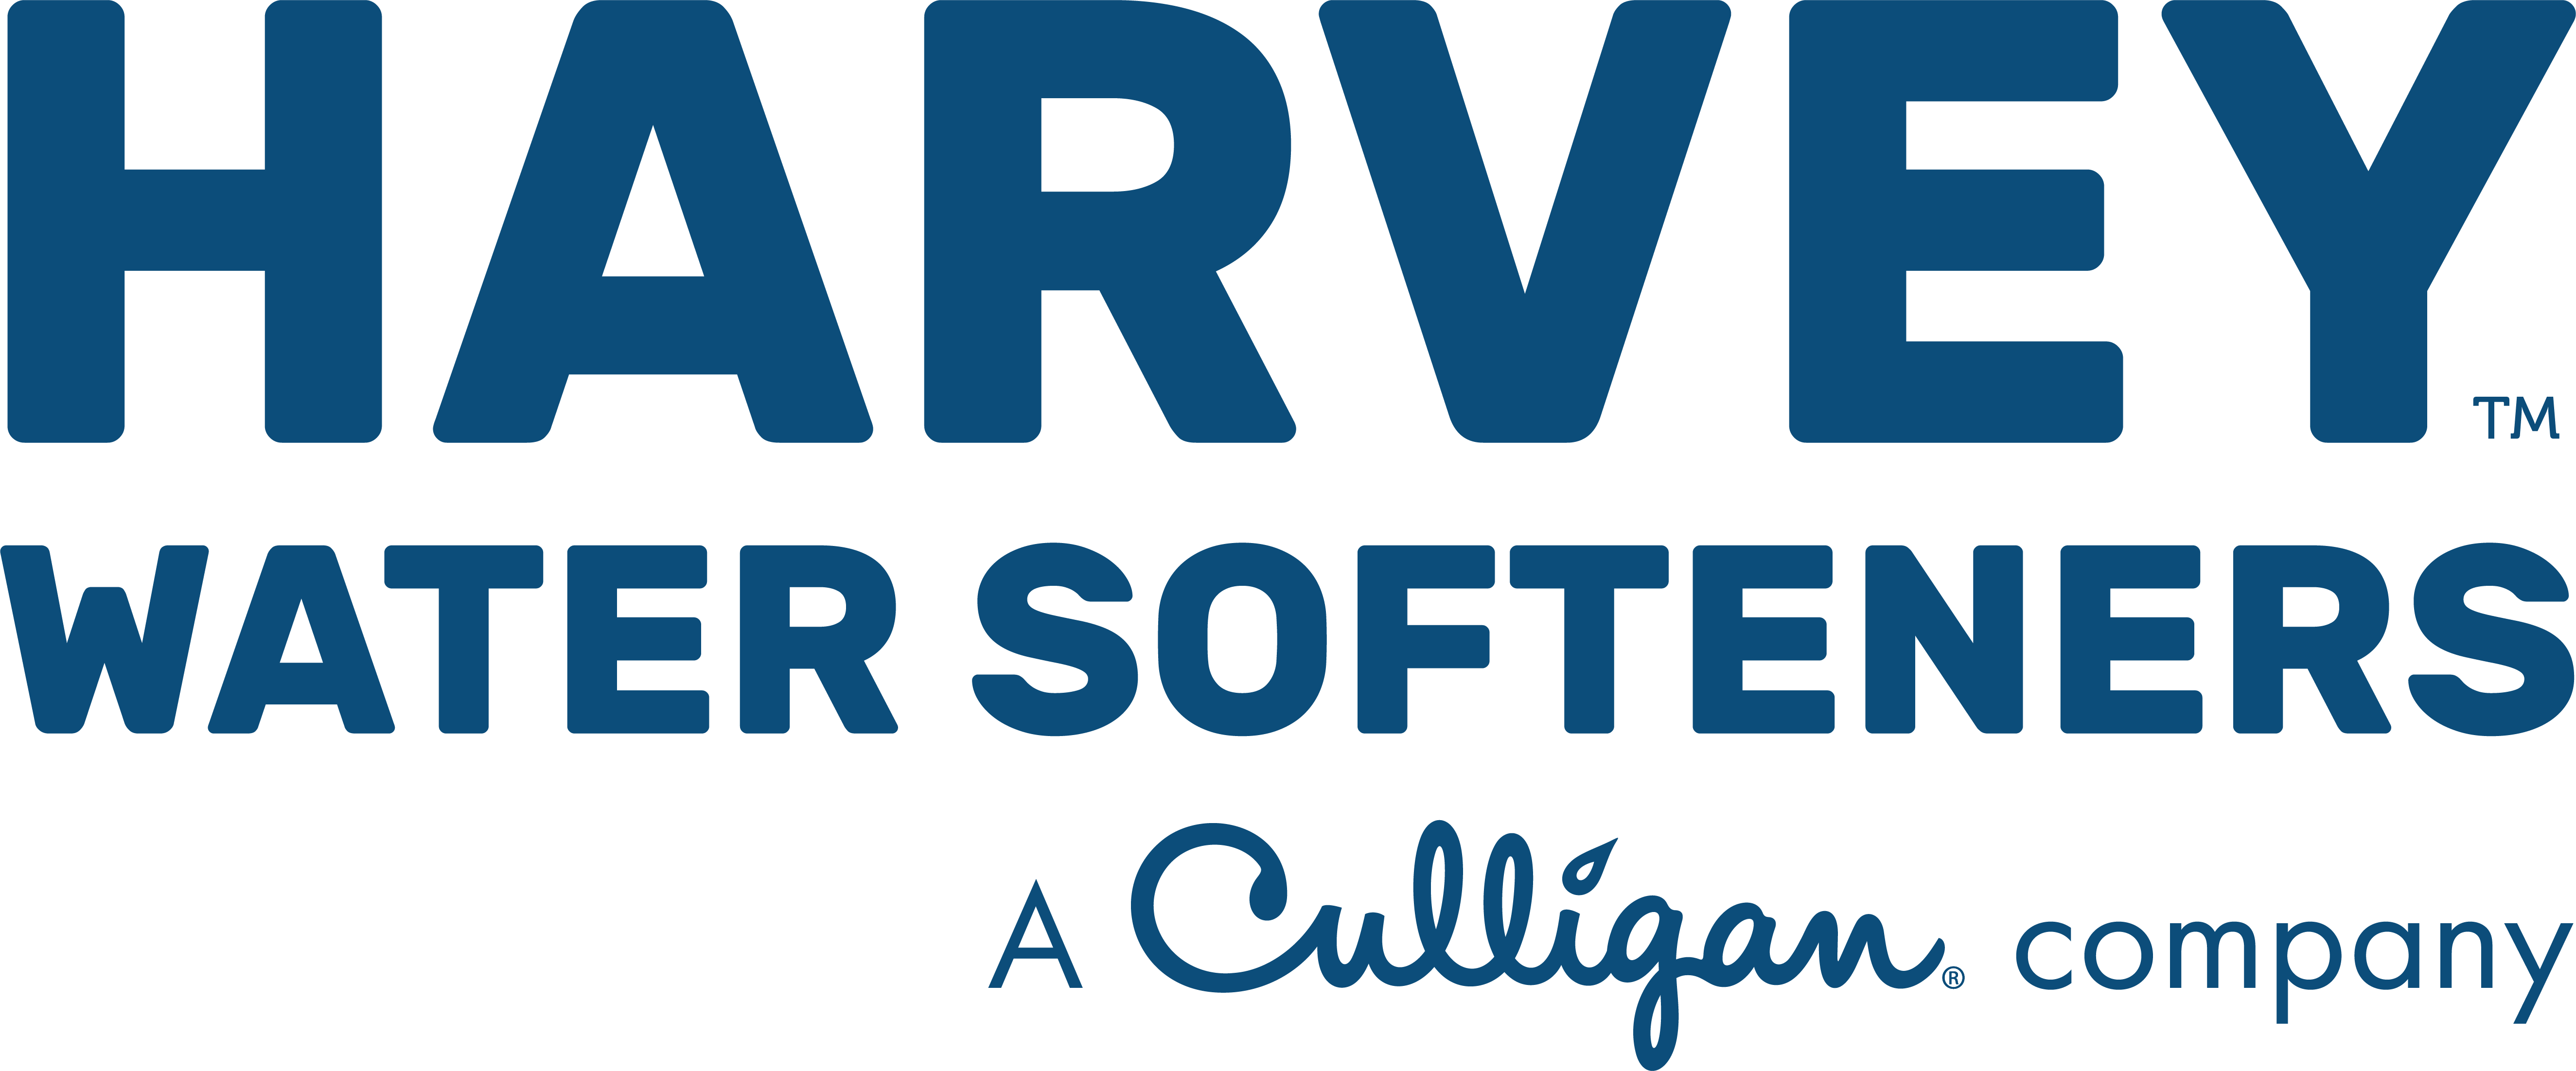 Harvey Water Softeners - A Culligan company